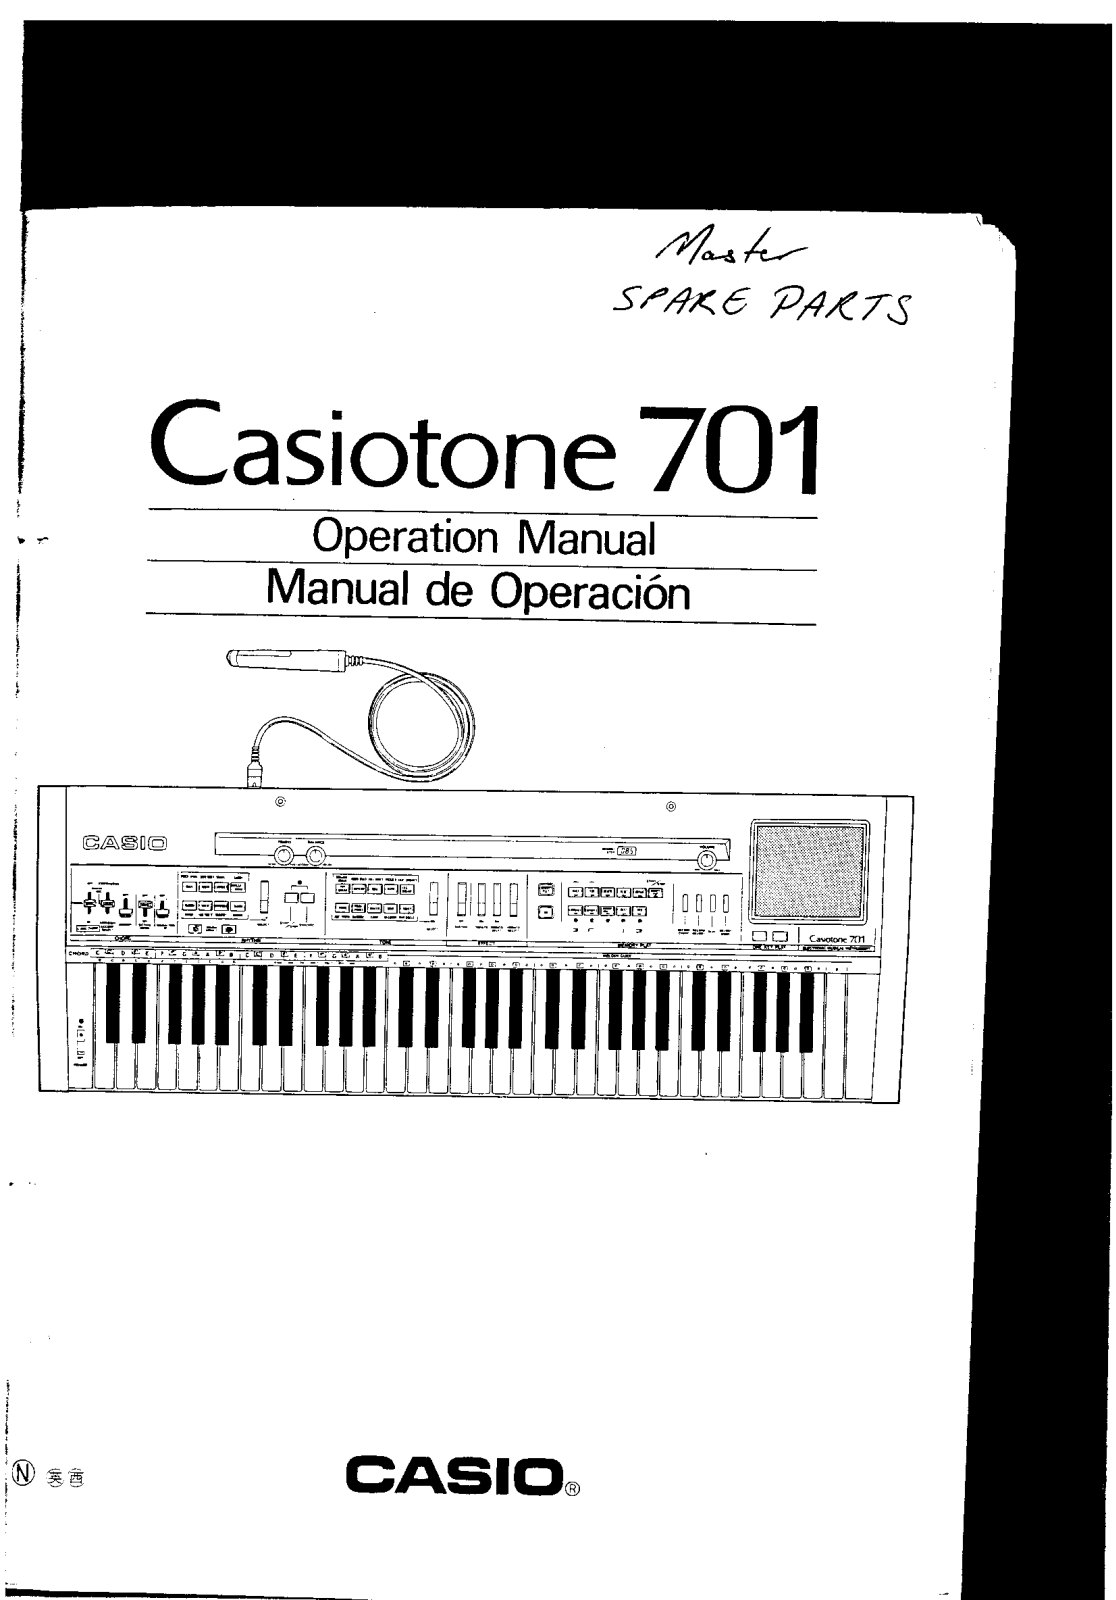 Casio Casiotone 701 User Manual